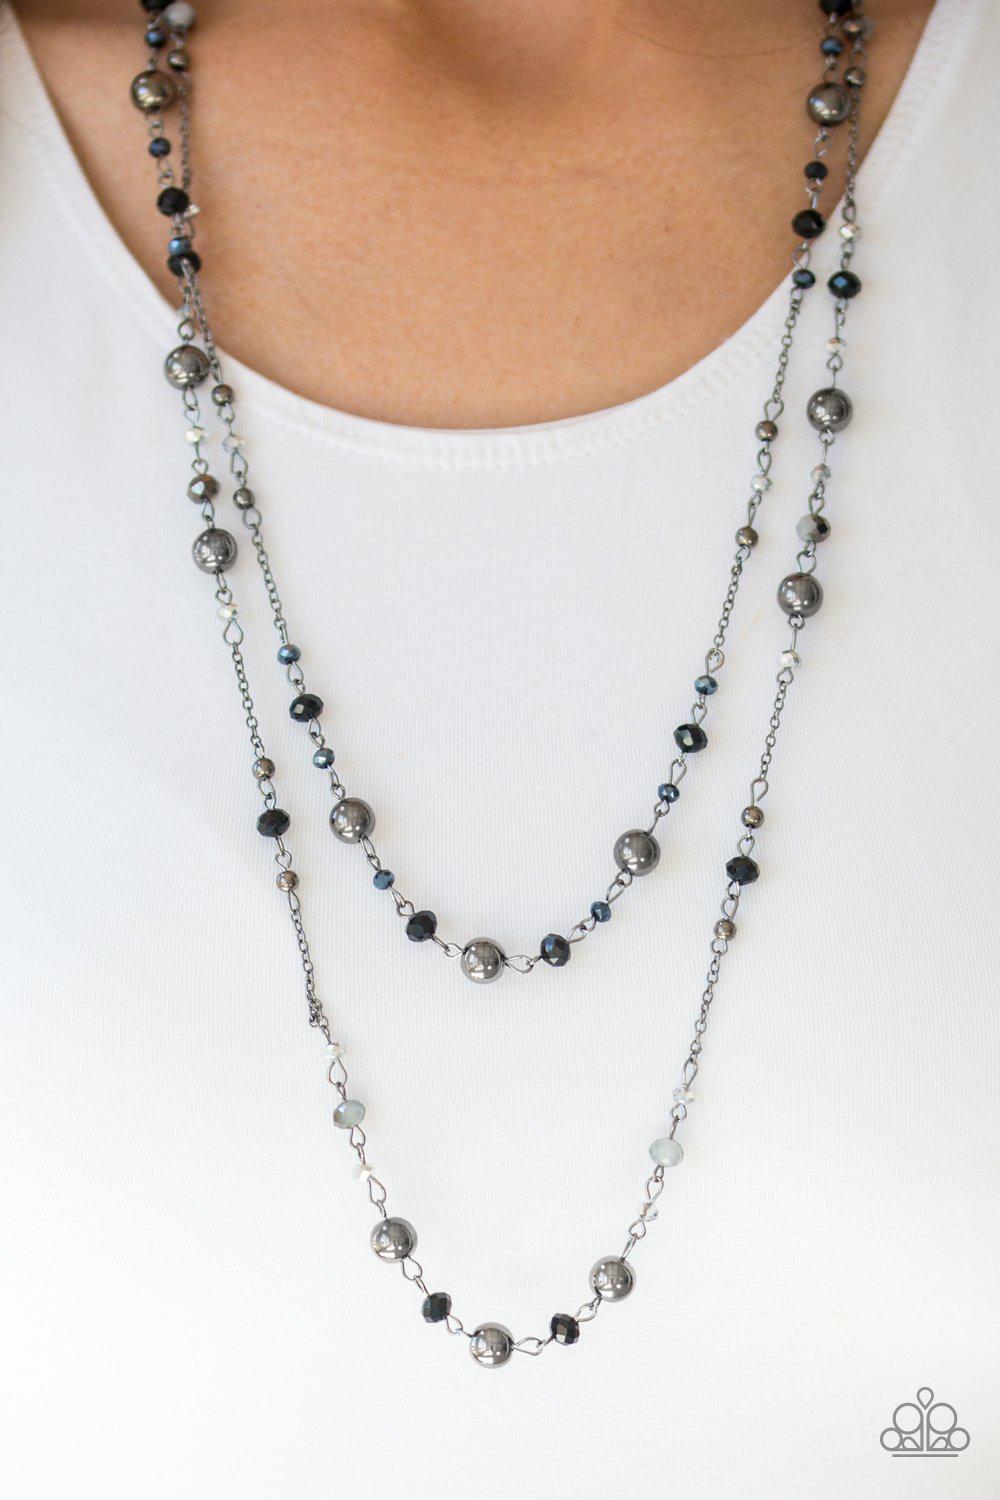 Grotto Glow Gunmetal Black Necklace - Paparazzi Accessories-CarasShop.com - $5 Jewelry by Cara Jewels